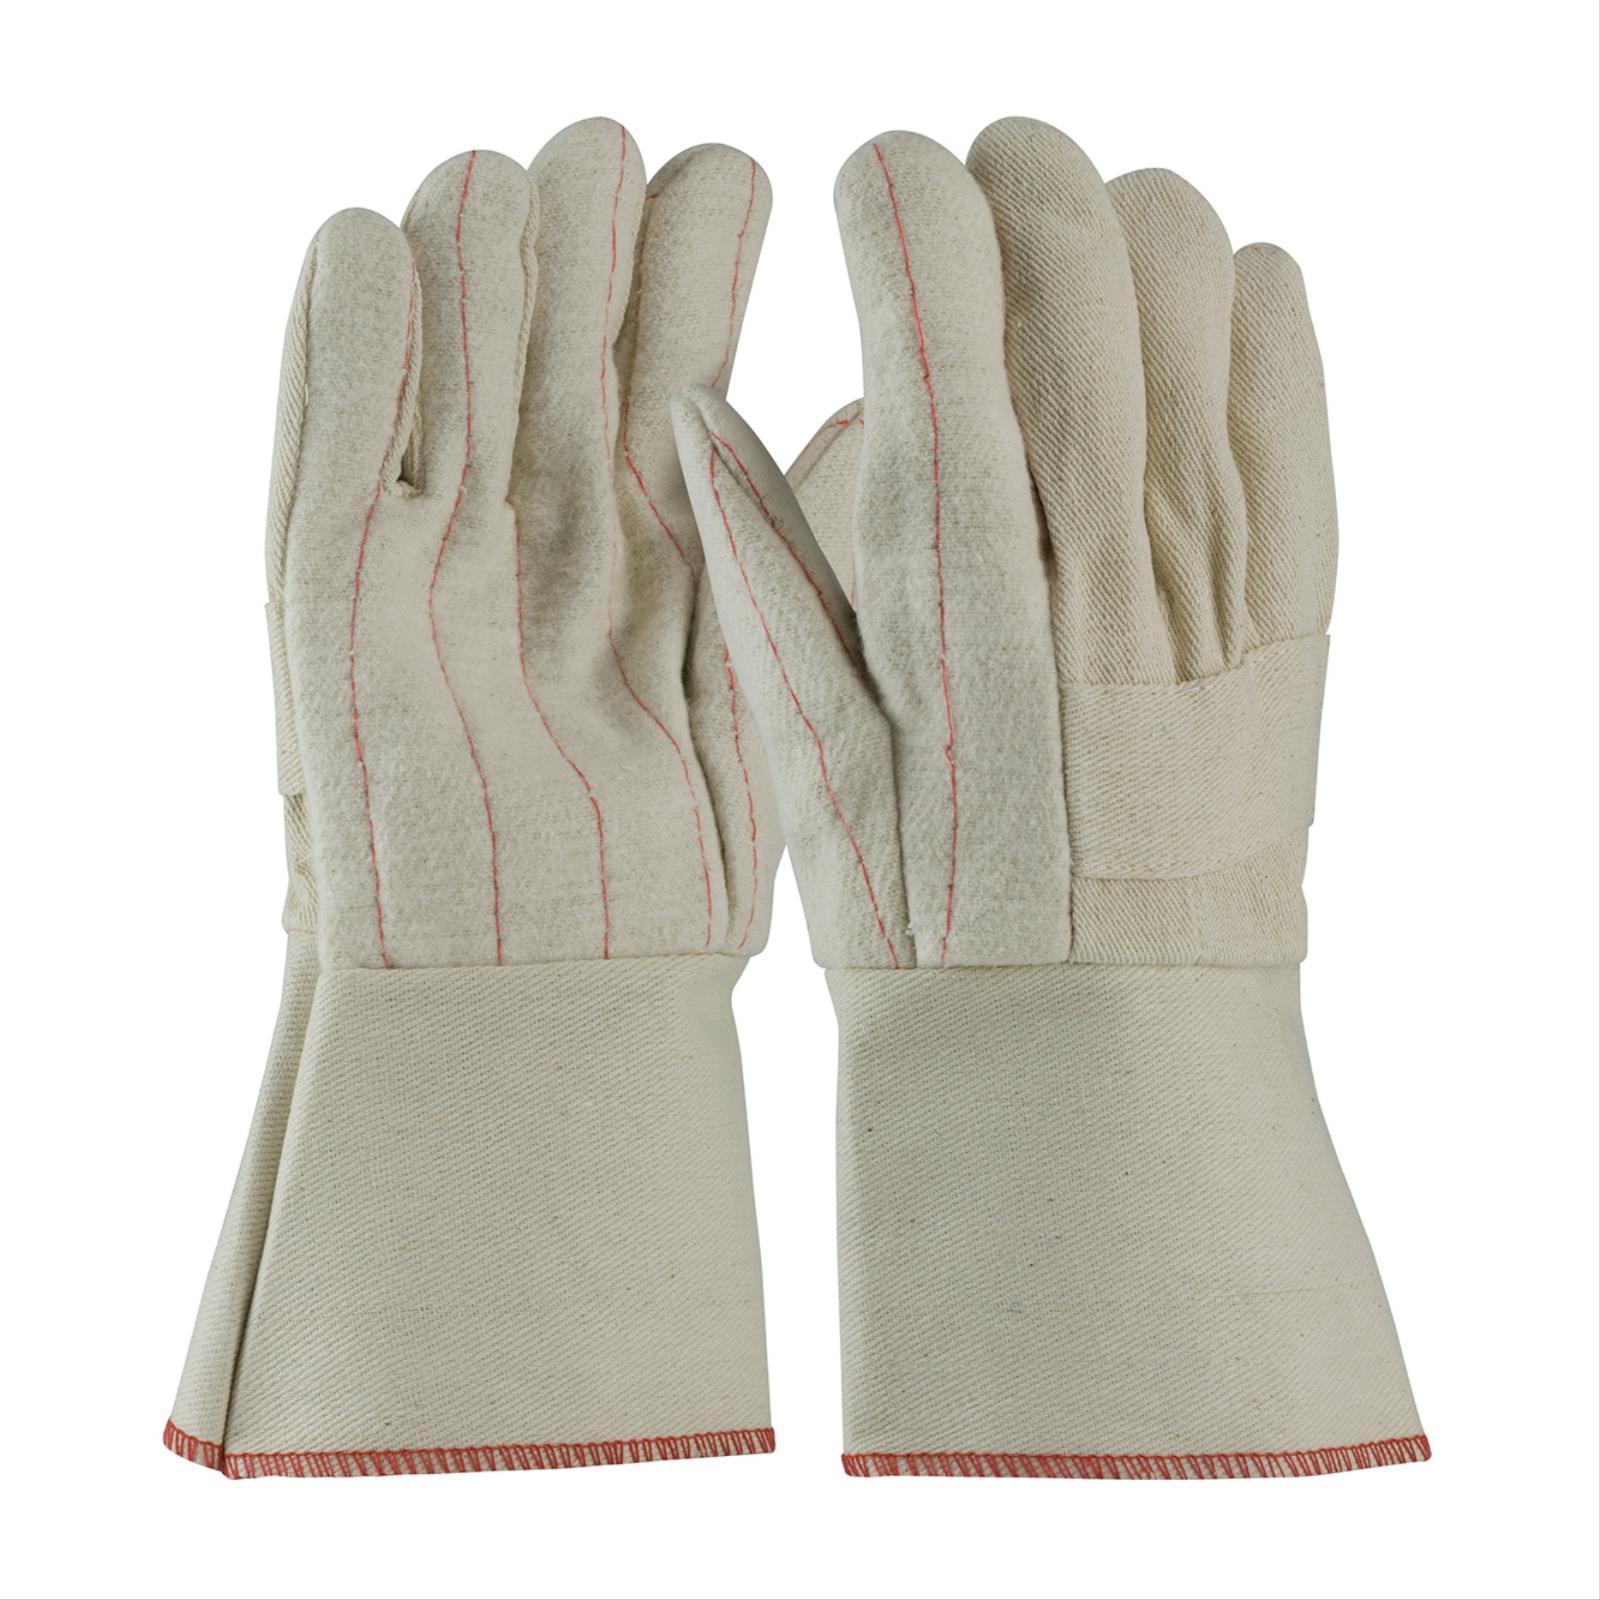 Premium Grade Hot Mill Glove, Burlap, Gauntlet Cuff, 32 oz